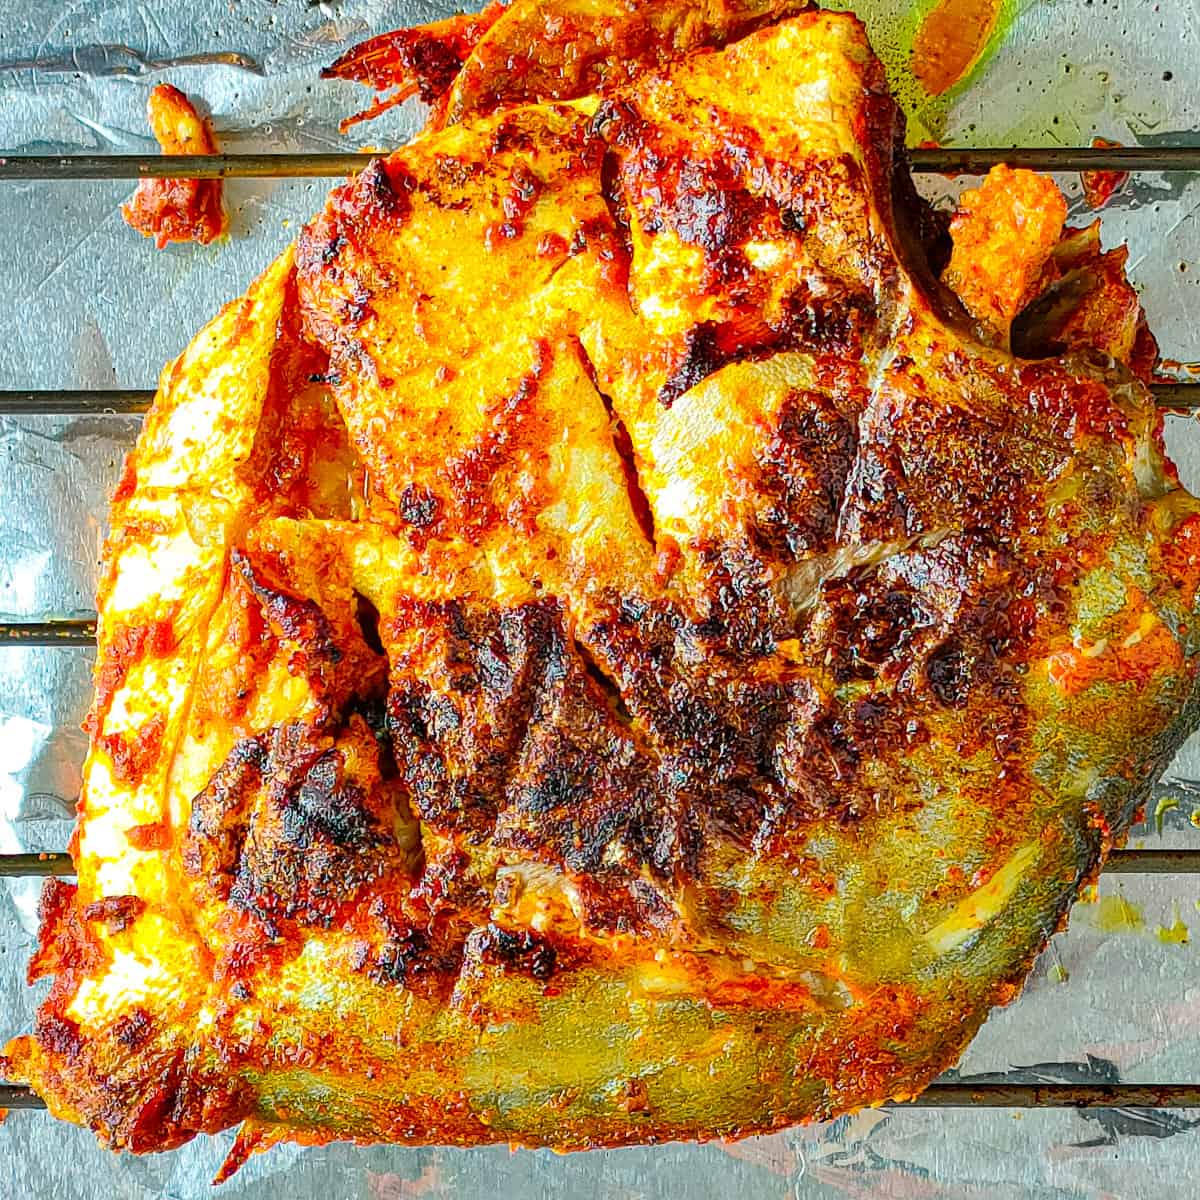 Roasted fish tandoori on an oven grill.